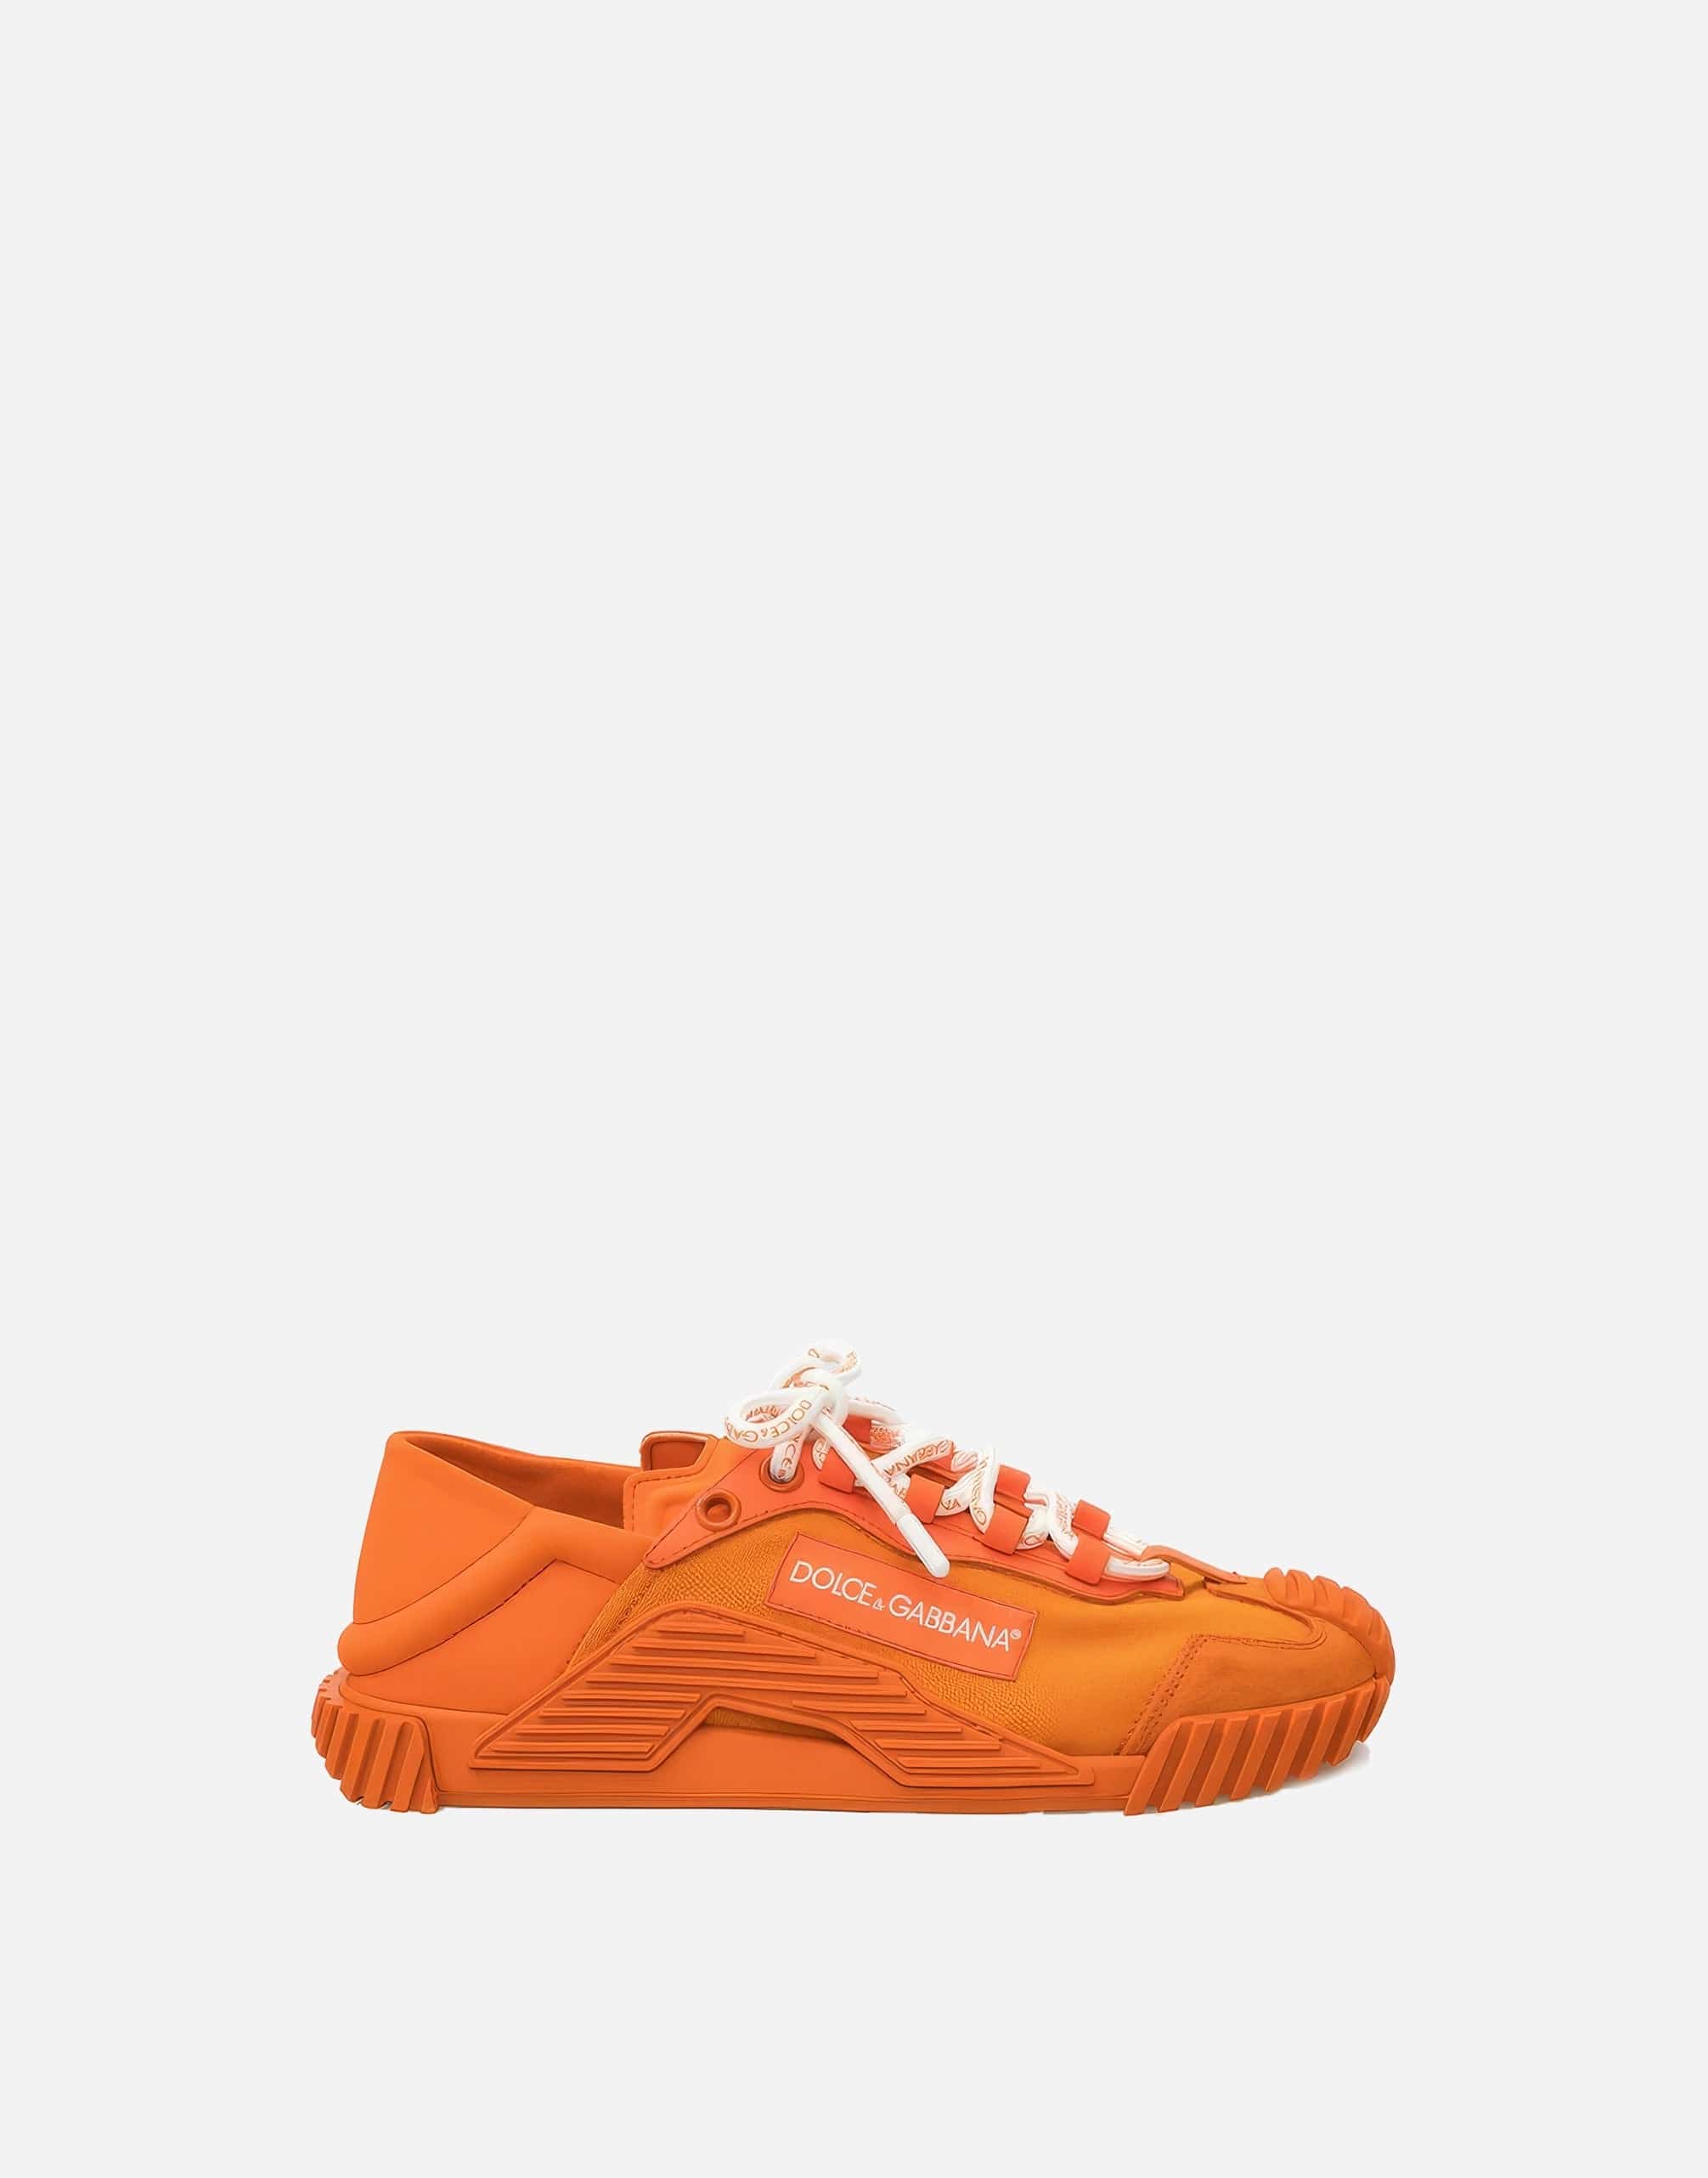 Dolce & Gabbana Orange NS1 Sneakers